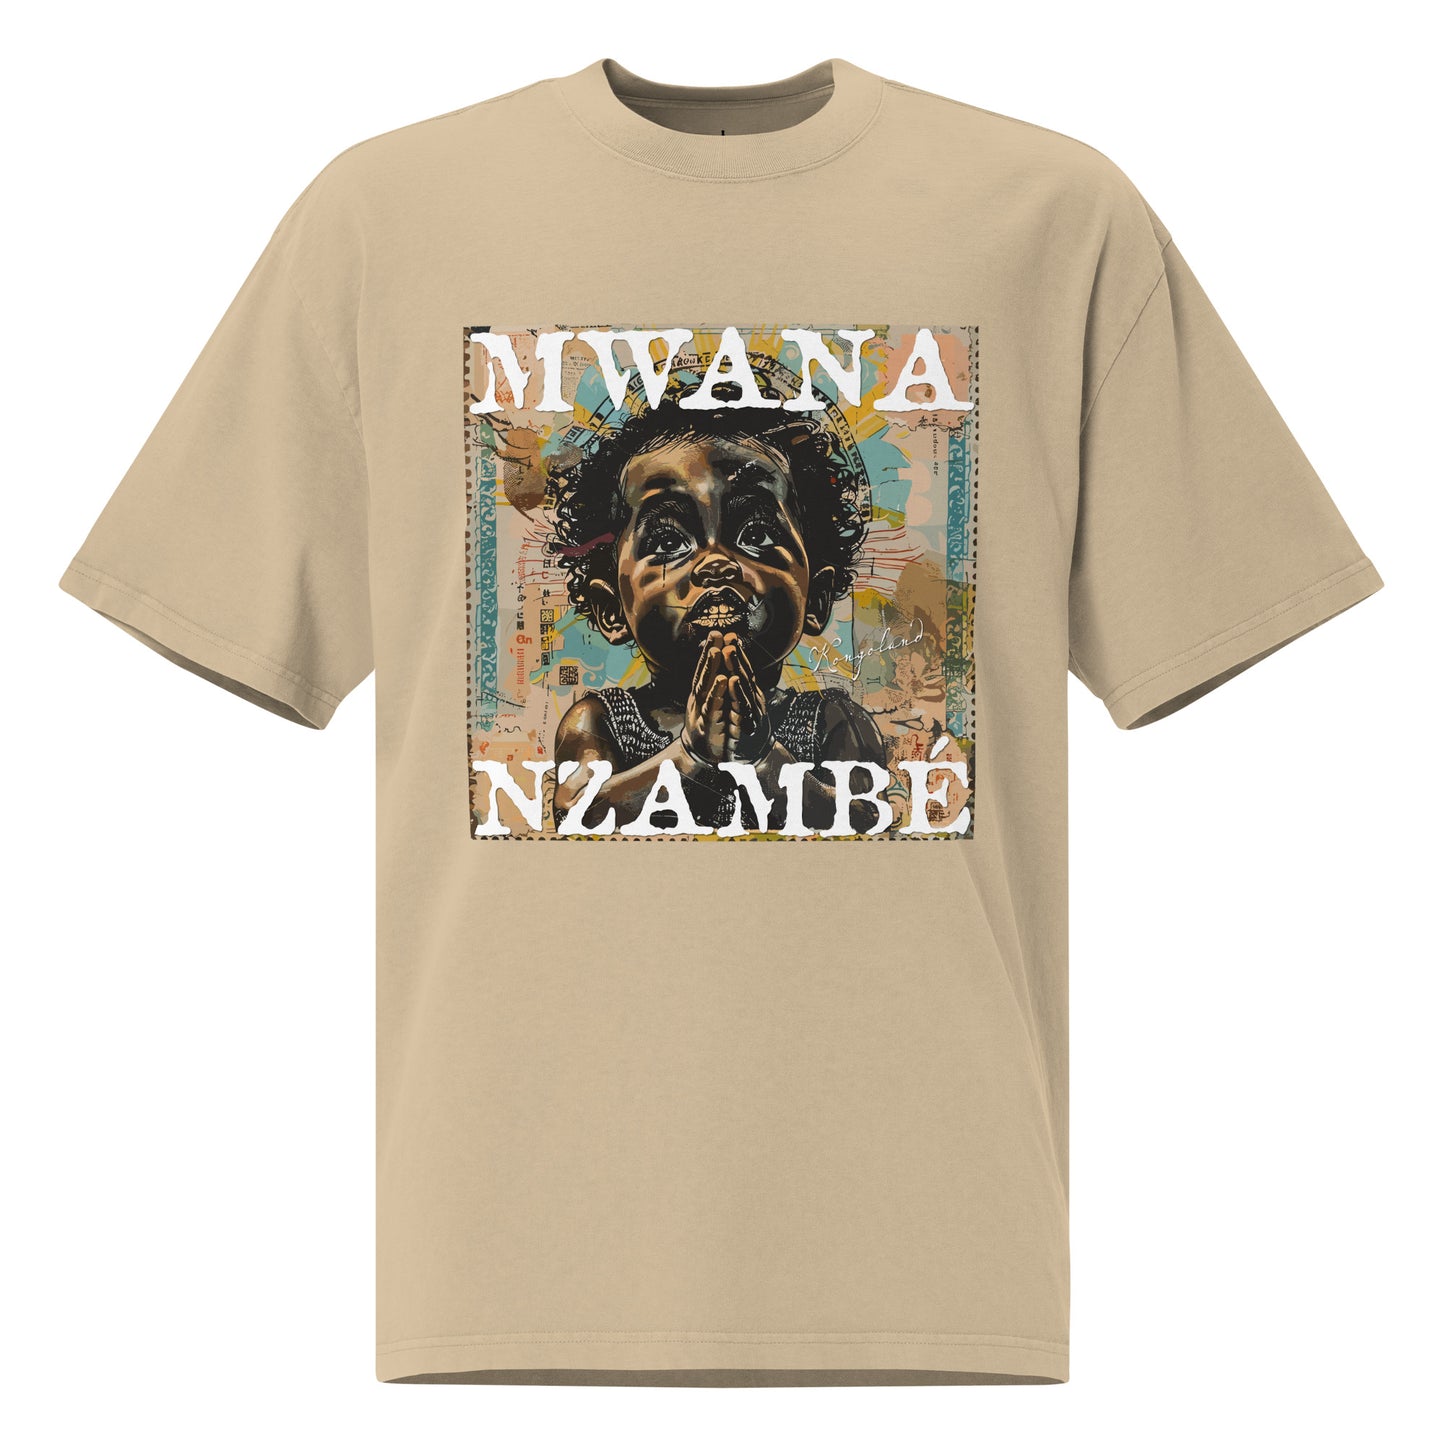 T-shirt Kongoland oversize MWANA NZAMBÉ délavé